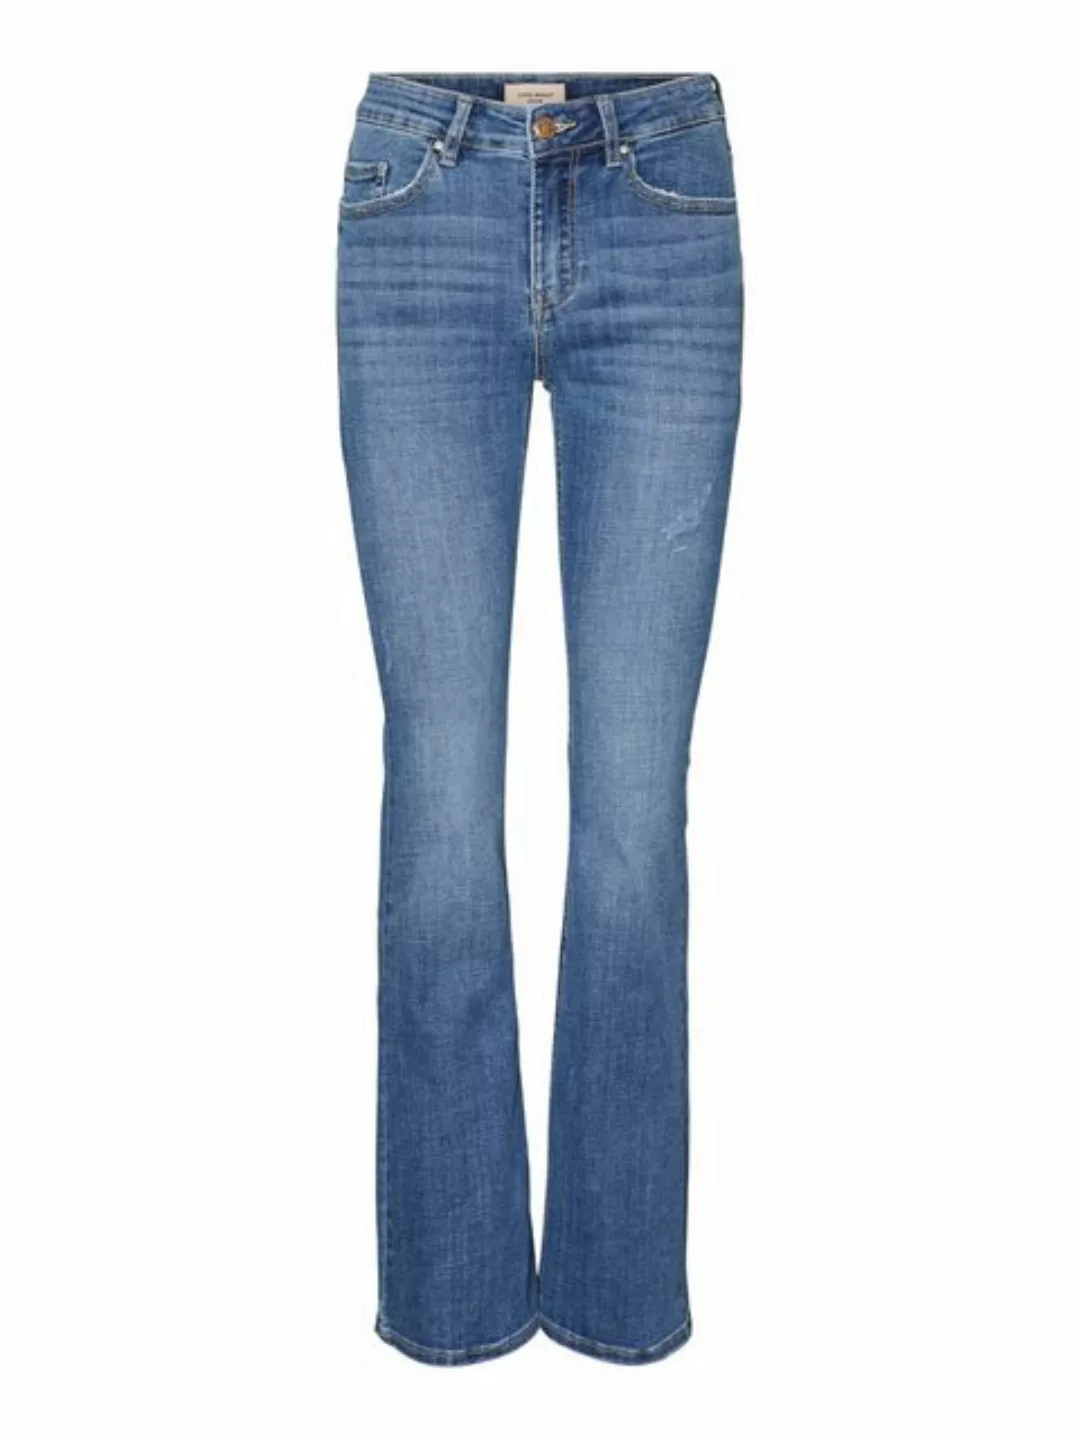 Vero Moda Damen Jeans VMFLASH MR FLARED LI347 GA XS S M L XL Blau - Medium günstig online kaufen